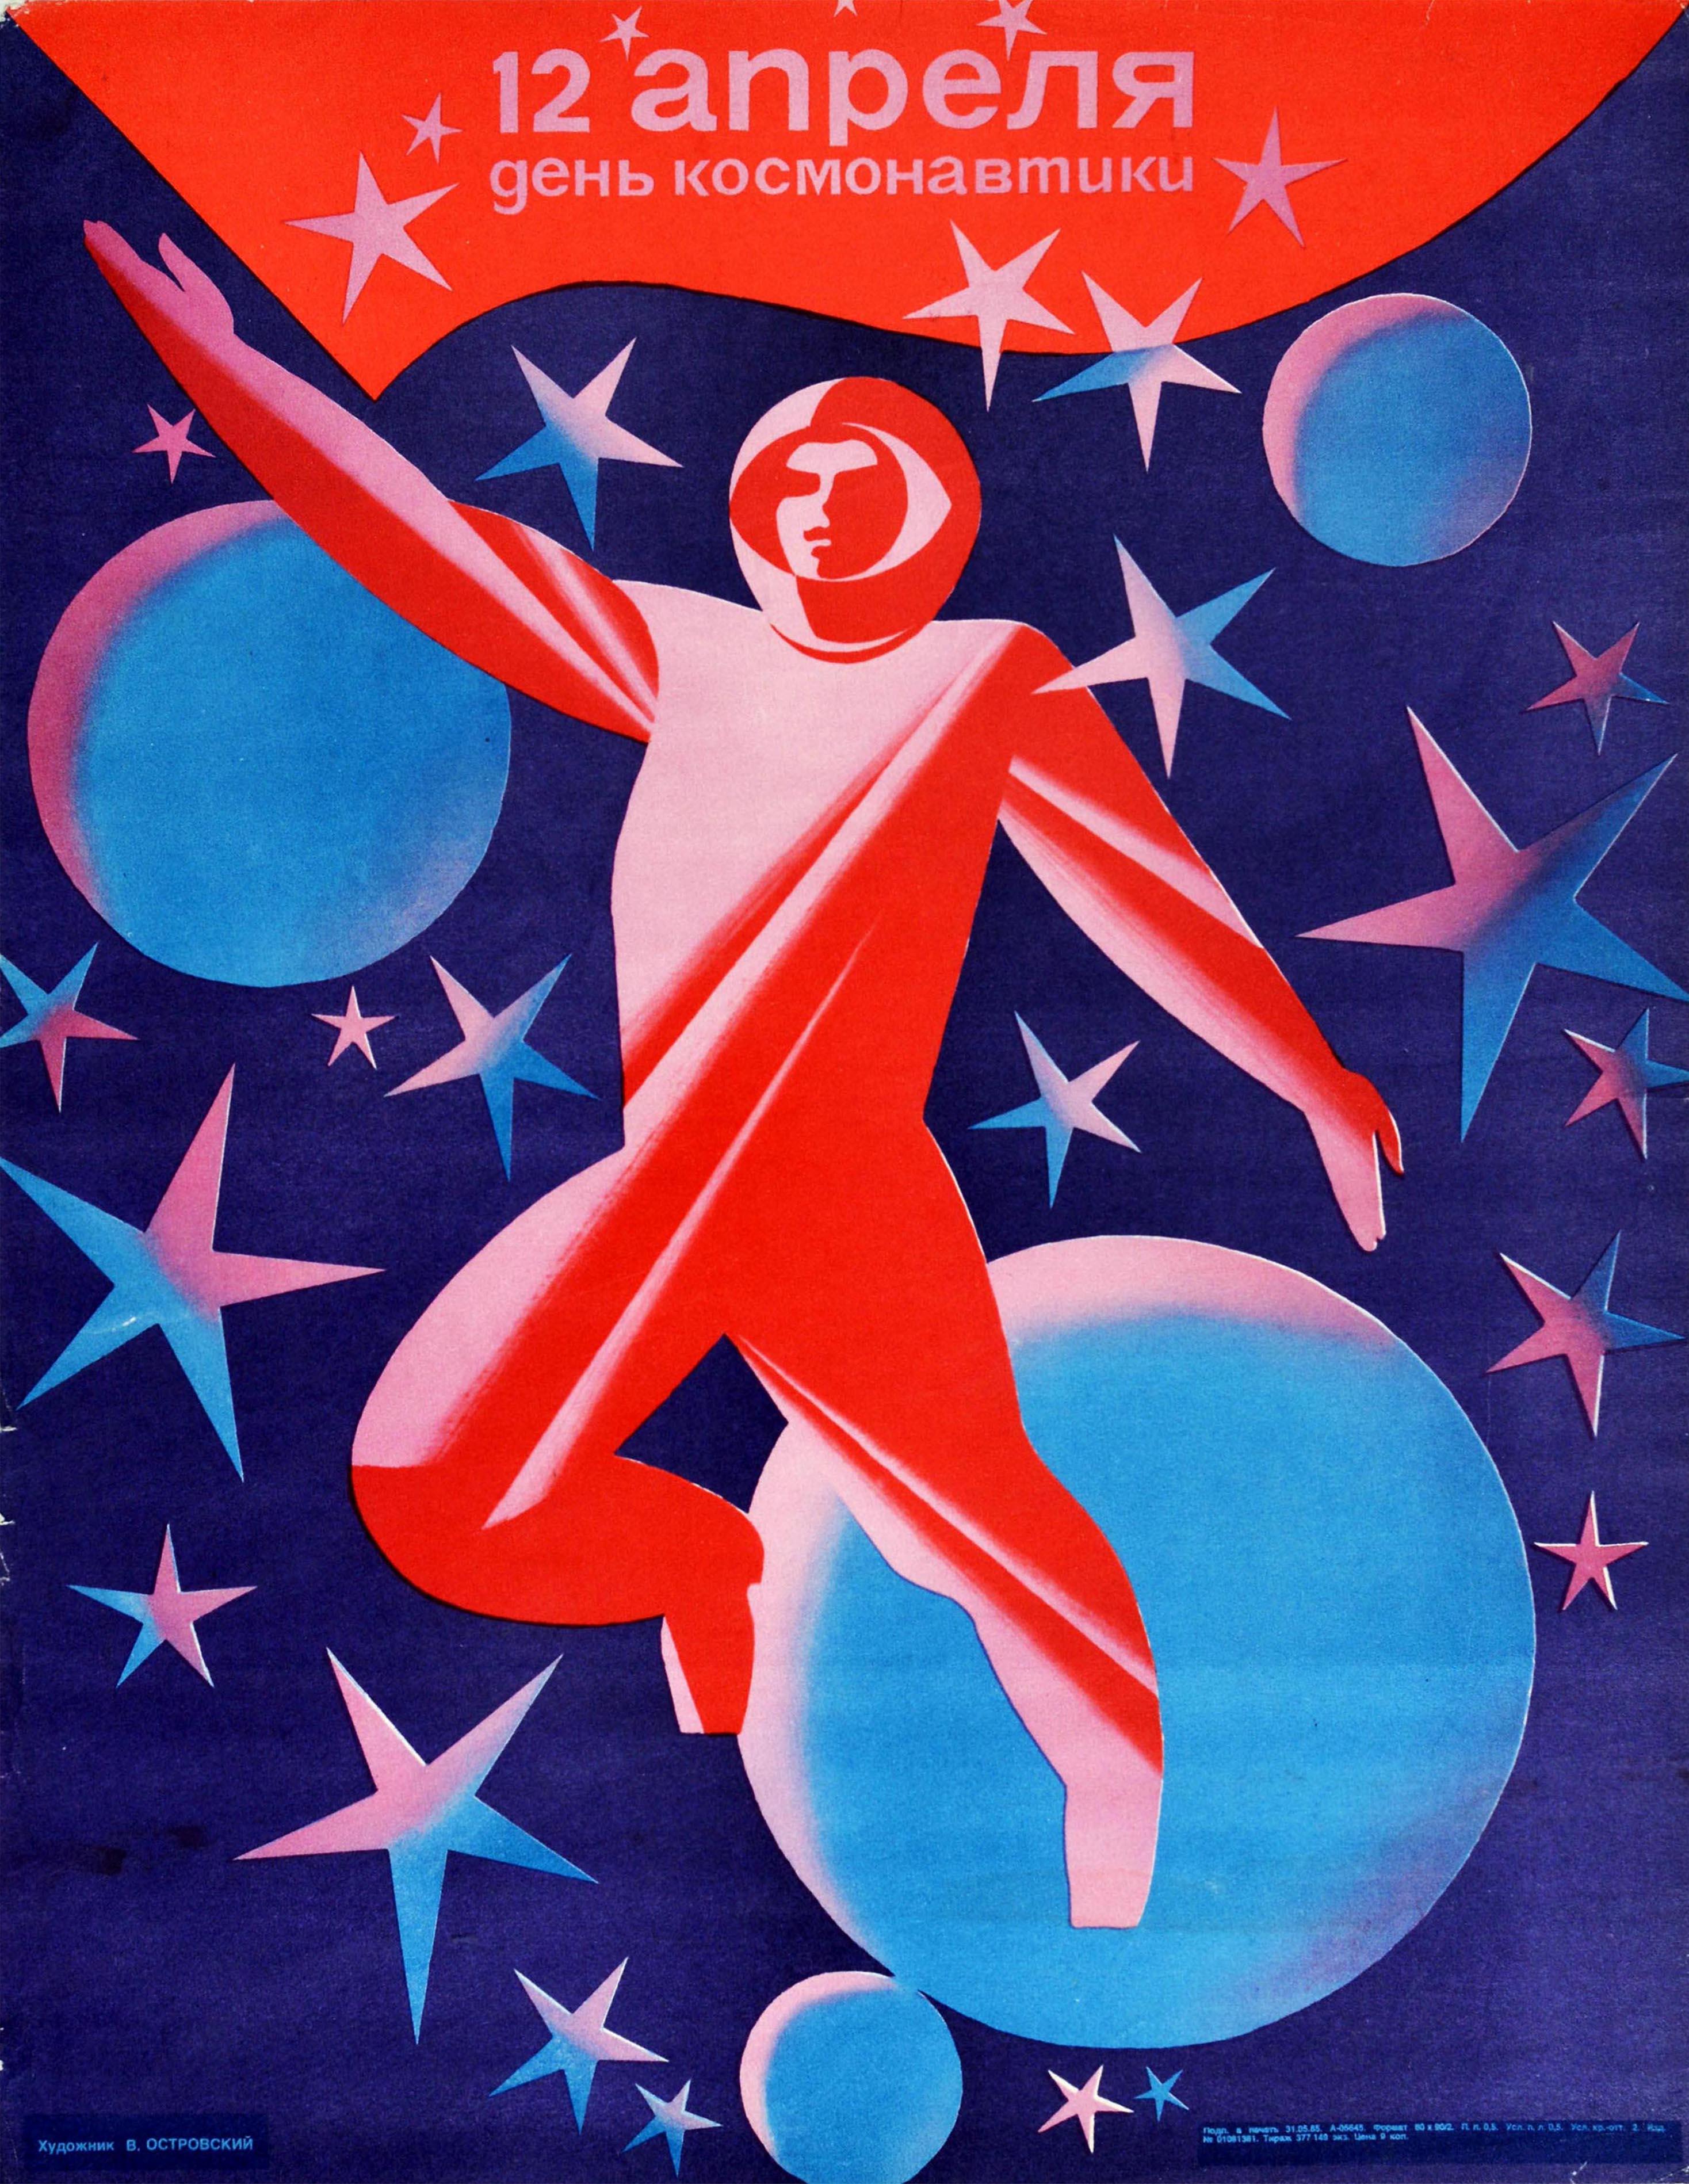 Ostrovskiy Print - Original Vintage Poster Cosmonautics Day 12 April USSR Space Exploration Gagarin